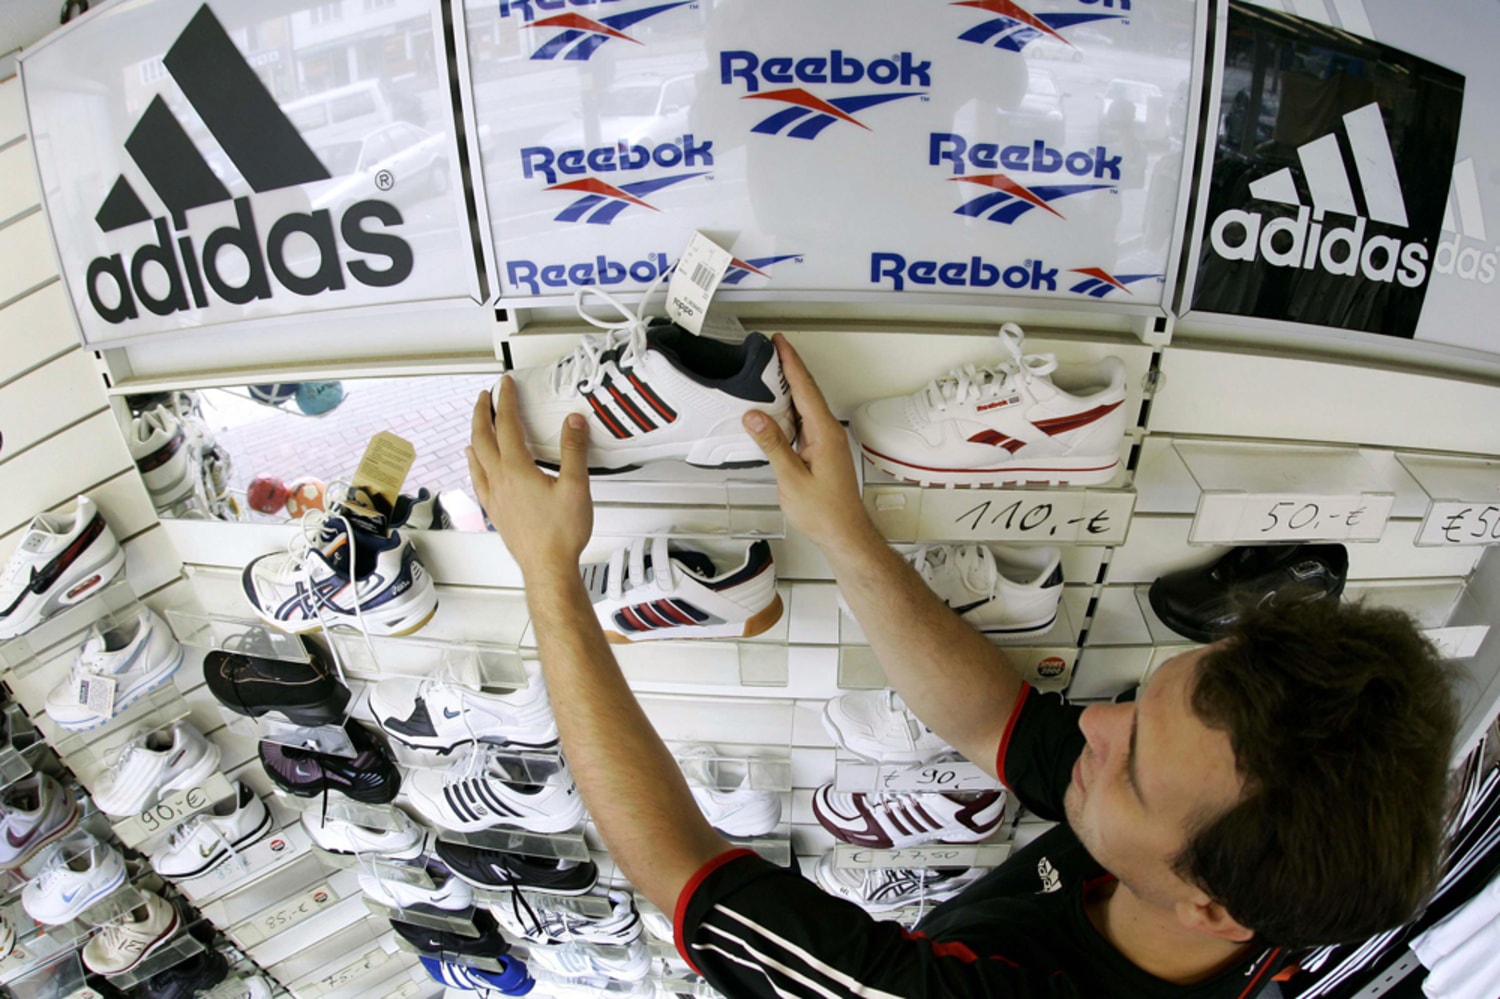 Sportswear Adidas to buy Reebok